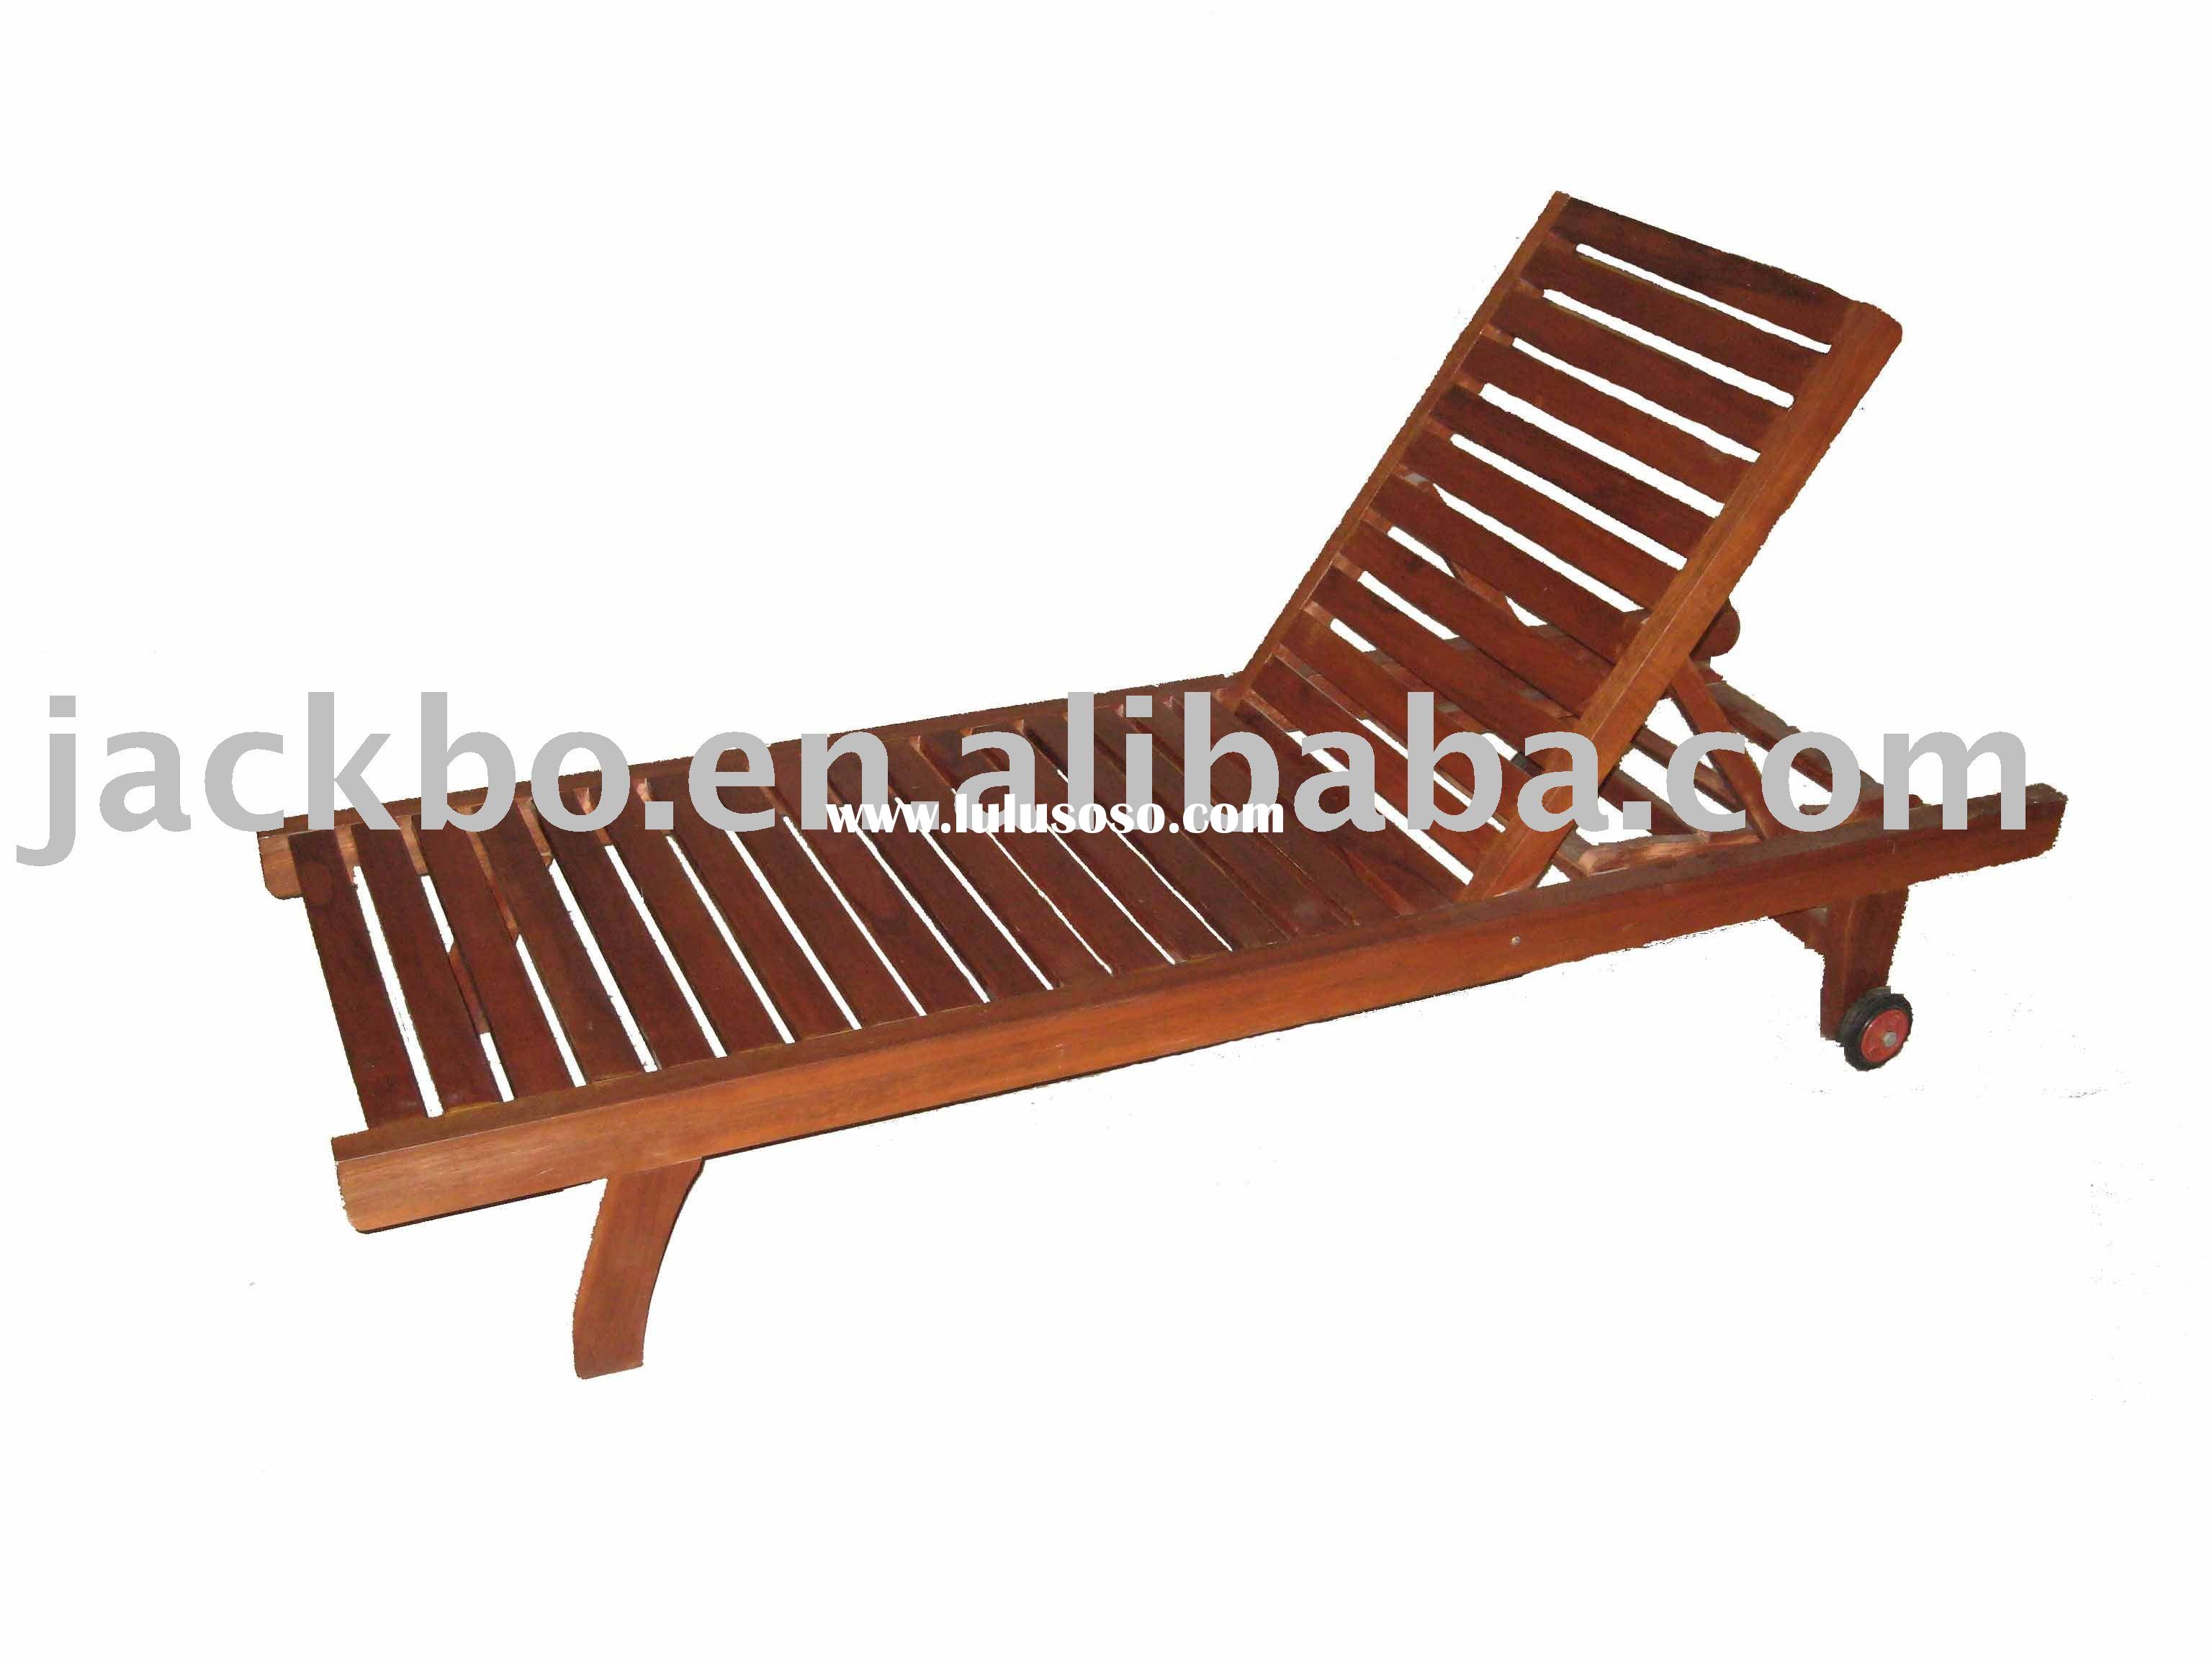 Wooden Beach Lounge Chair Plans